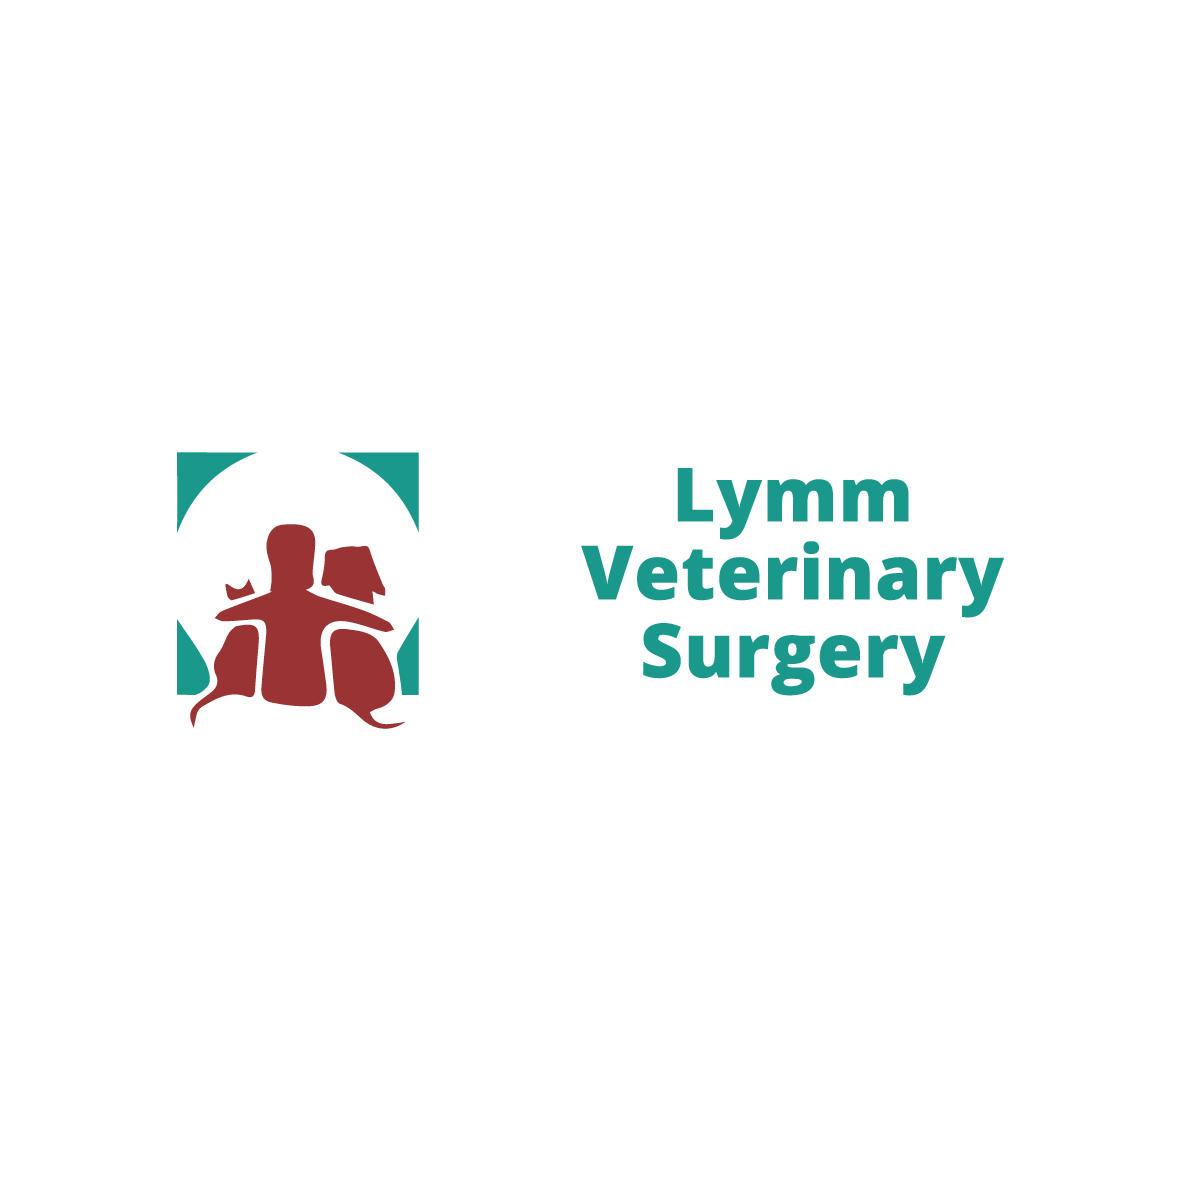 Willows Veterinary Group - Lymm Veterinary Surgery Lymm 01925 752721